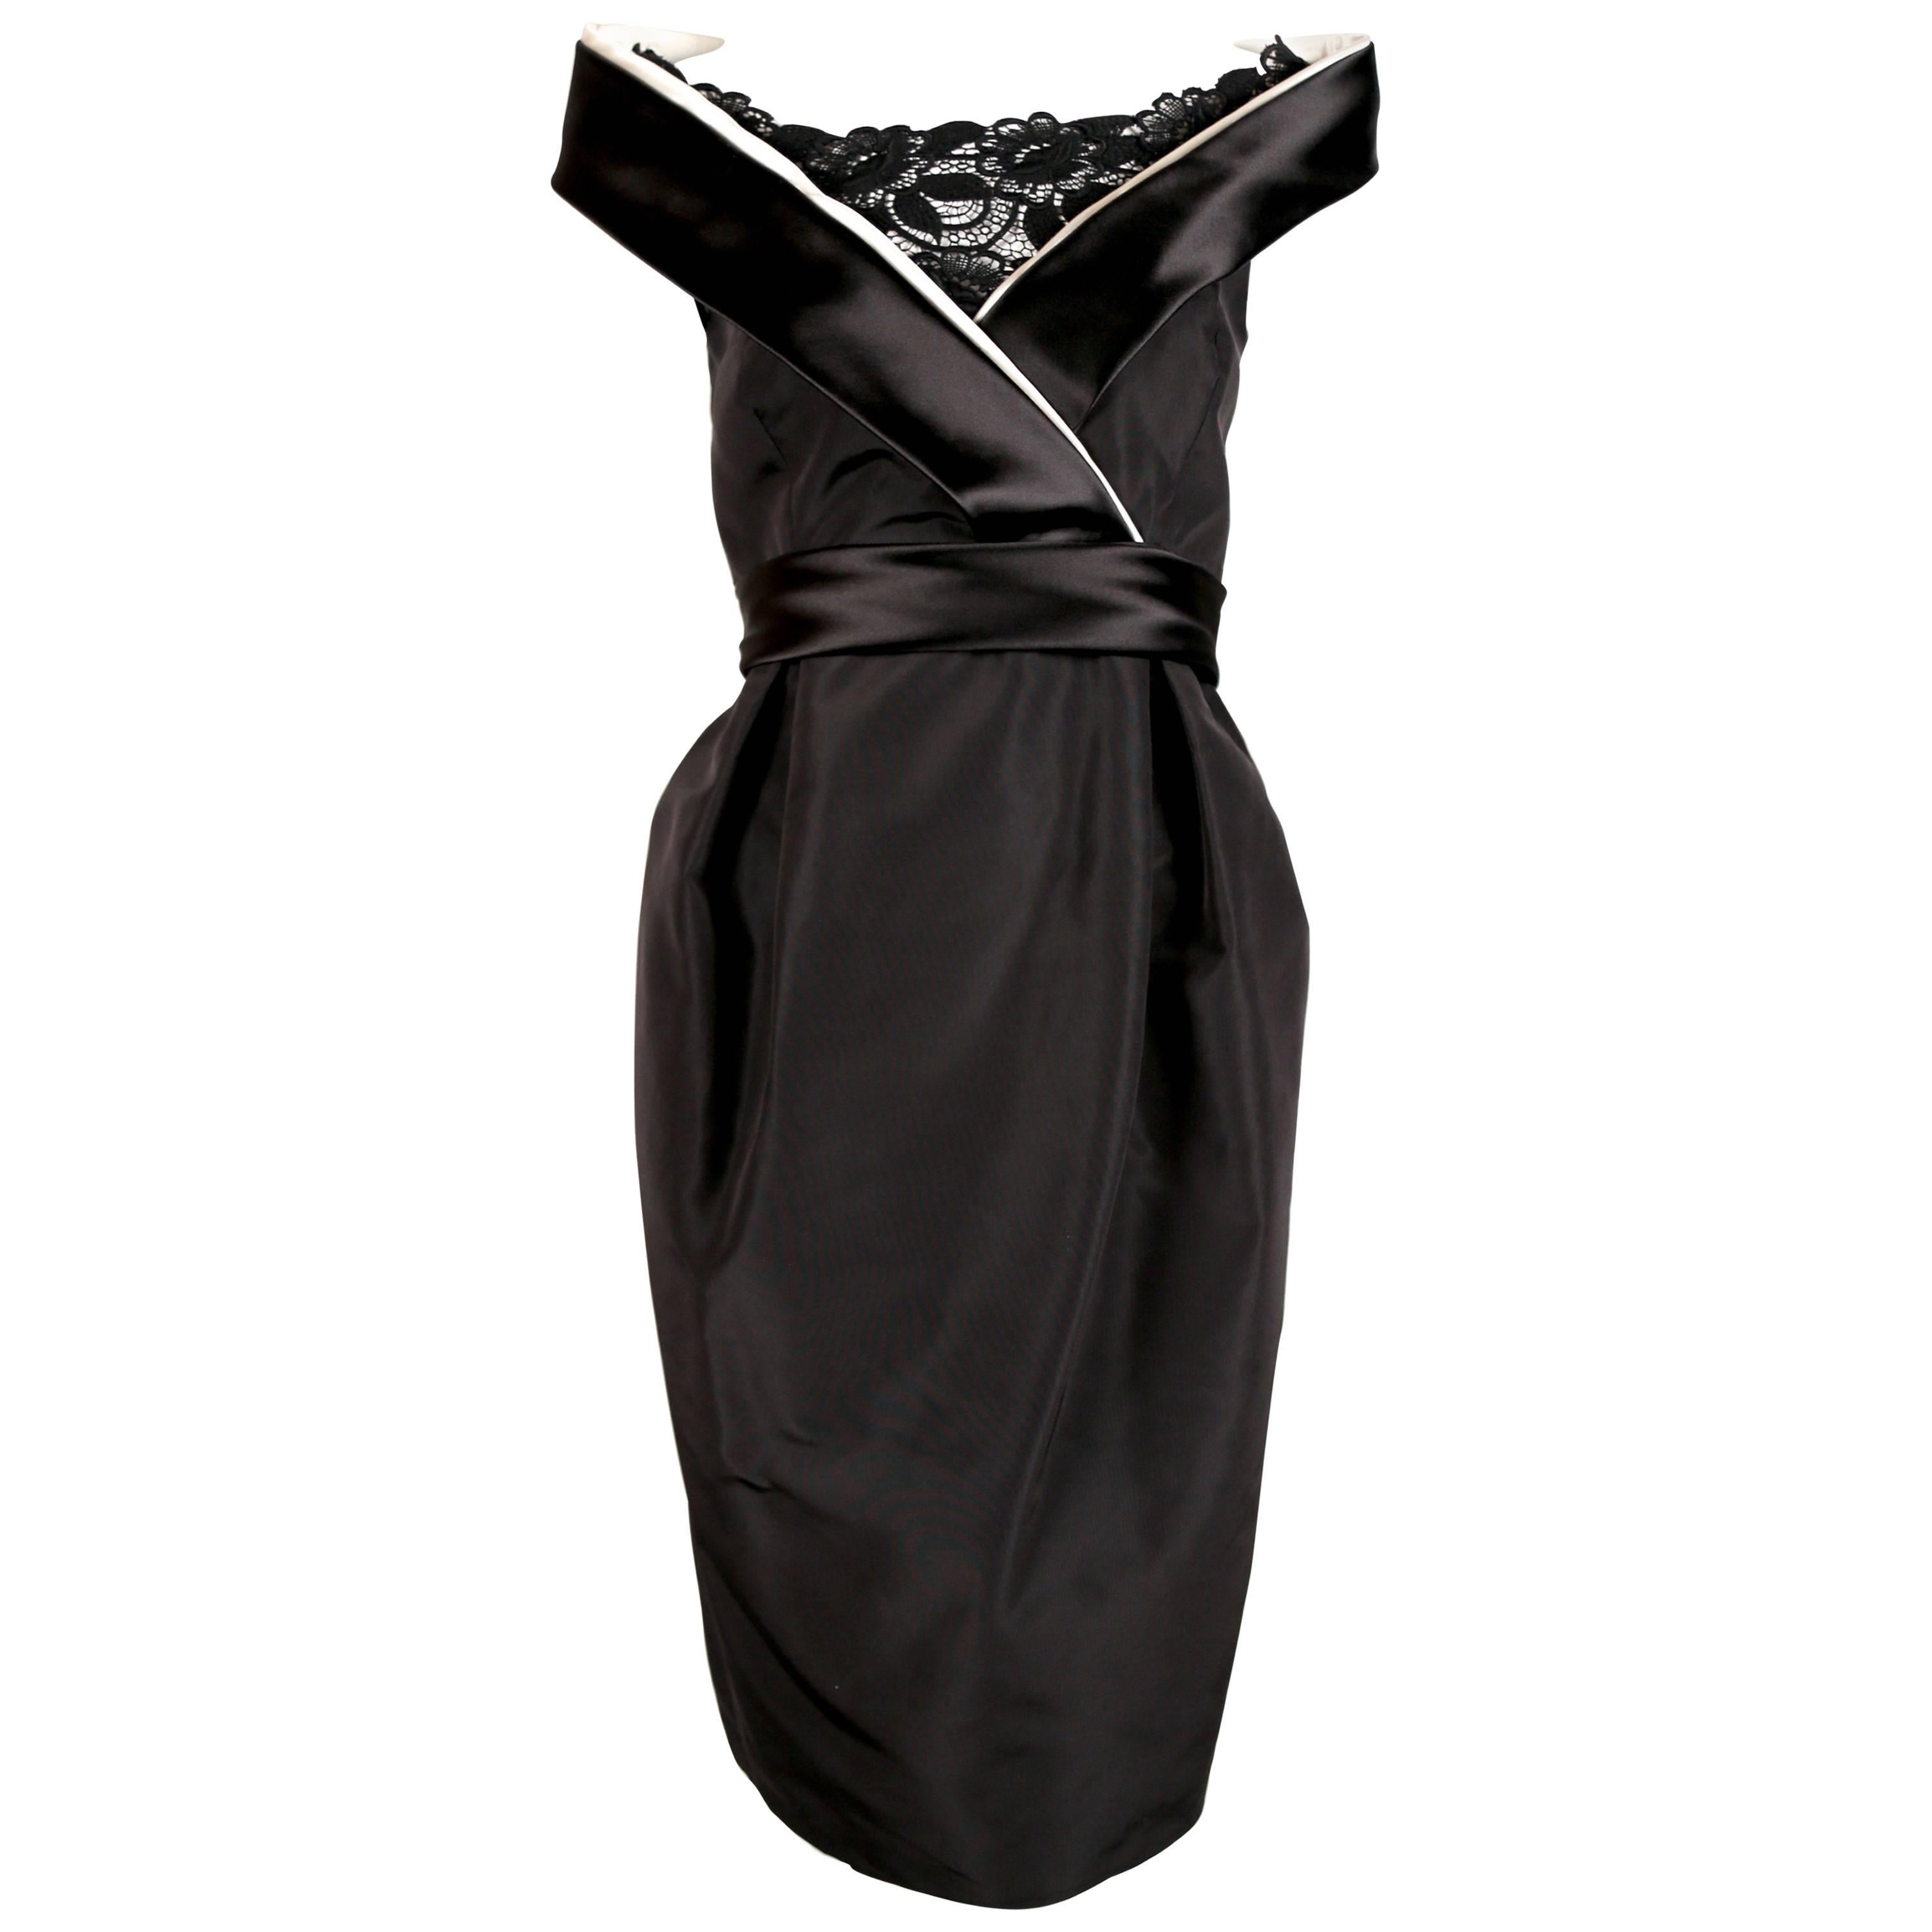 Alexander McQueen black satin dress with raised collar, 2006  